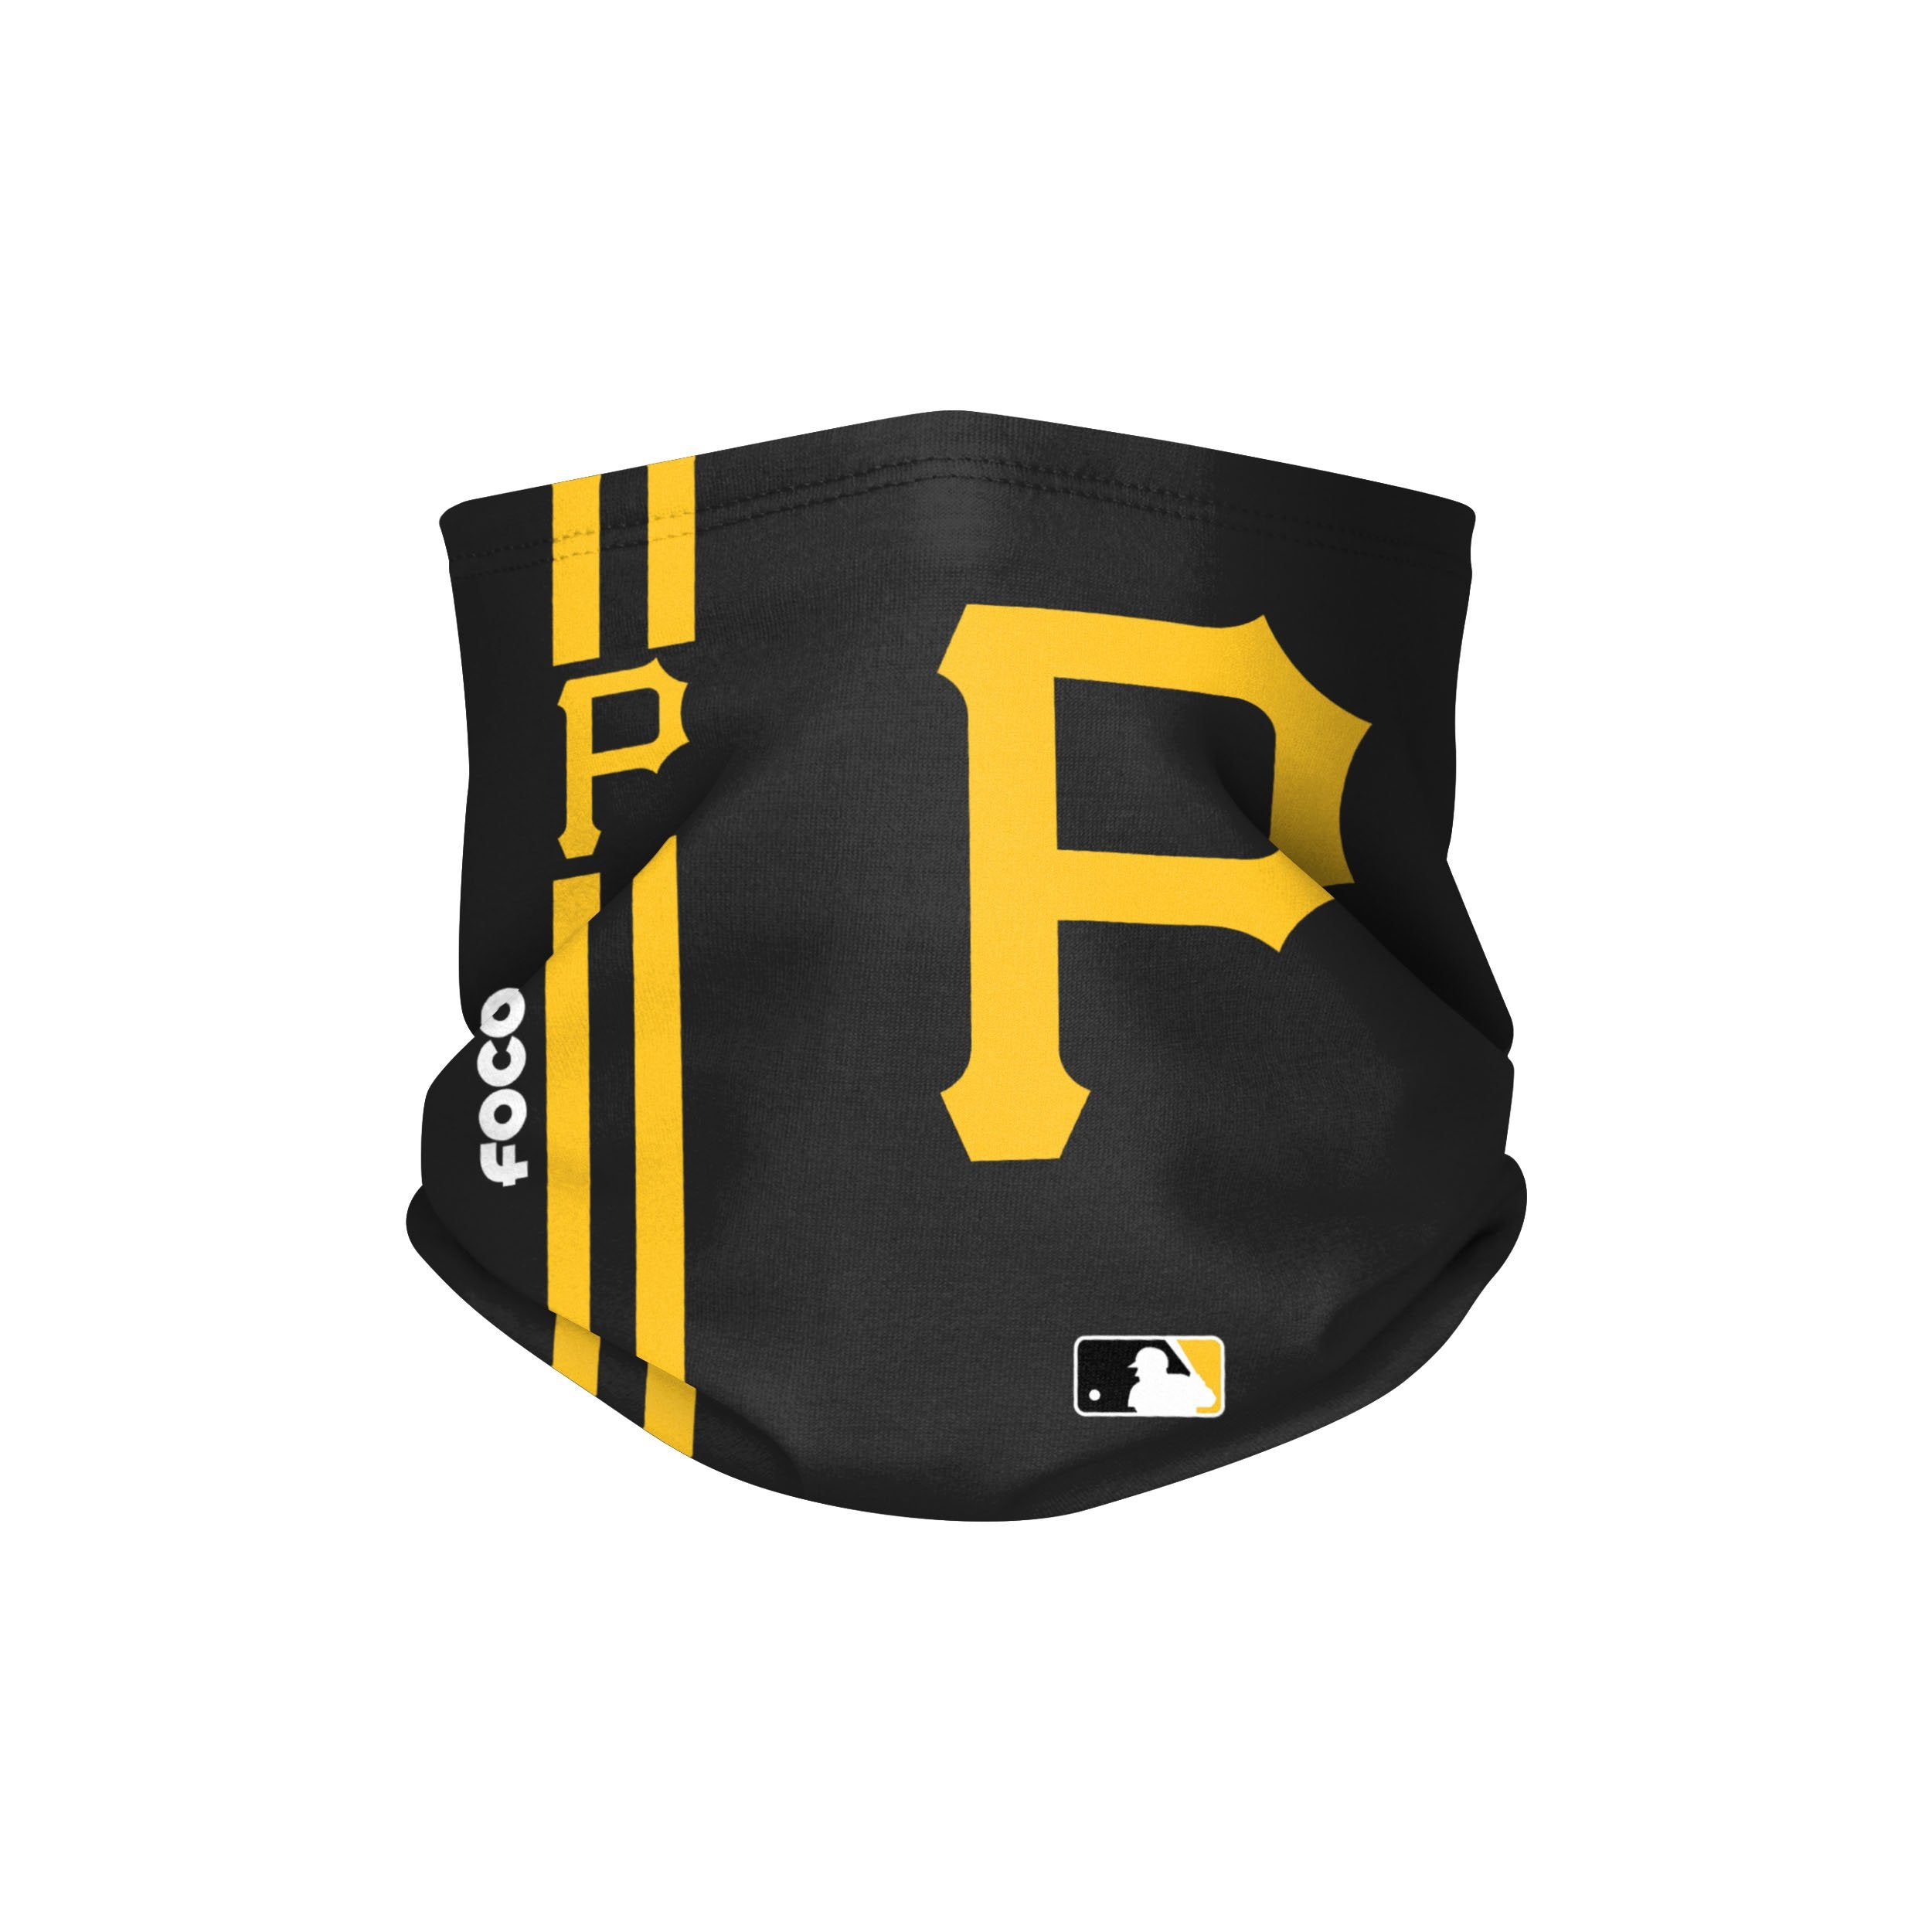 Pittsburgh Pirates MLB 3D BRXLZ Puzzle Blocks - Mascot- Pirate Parrot